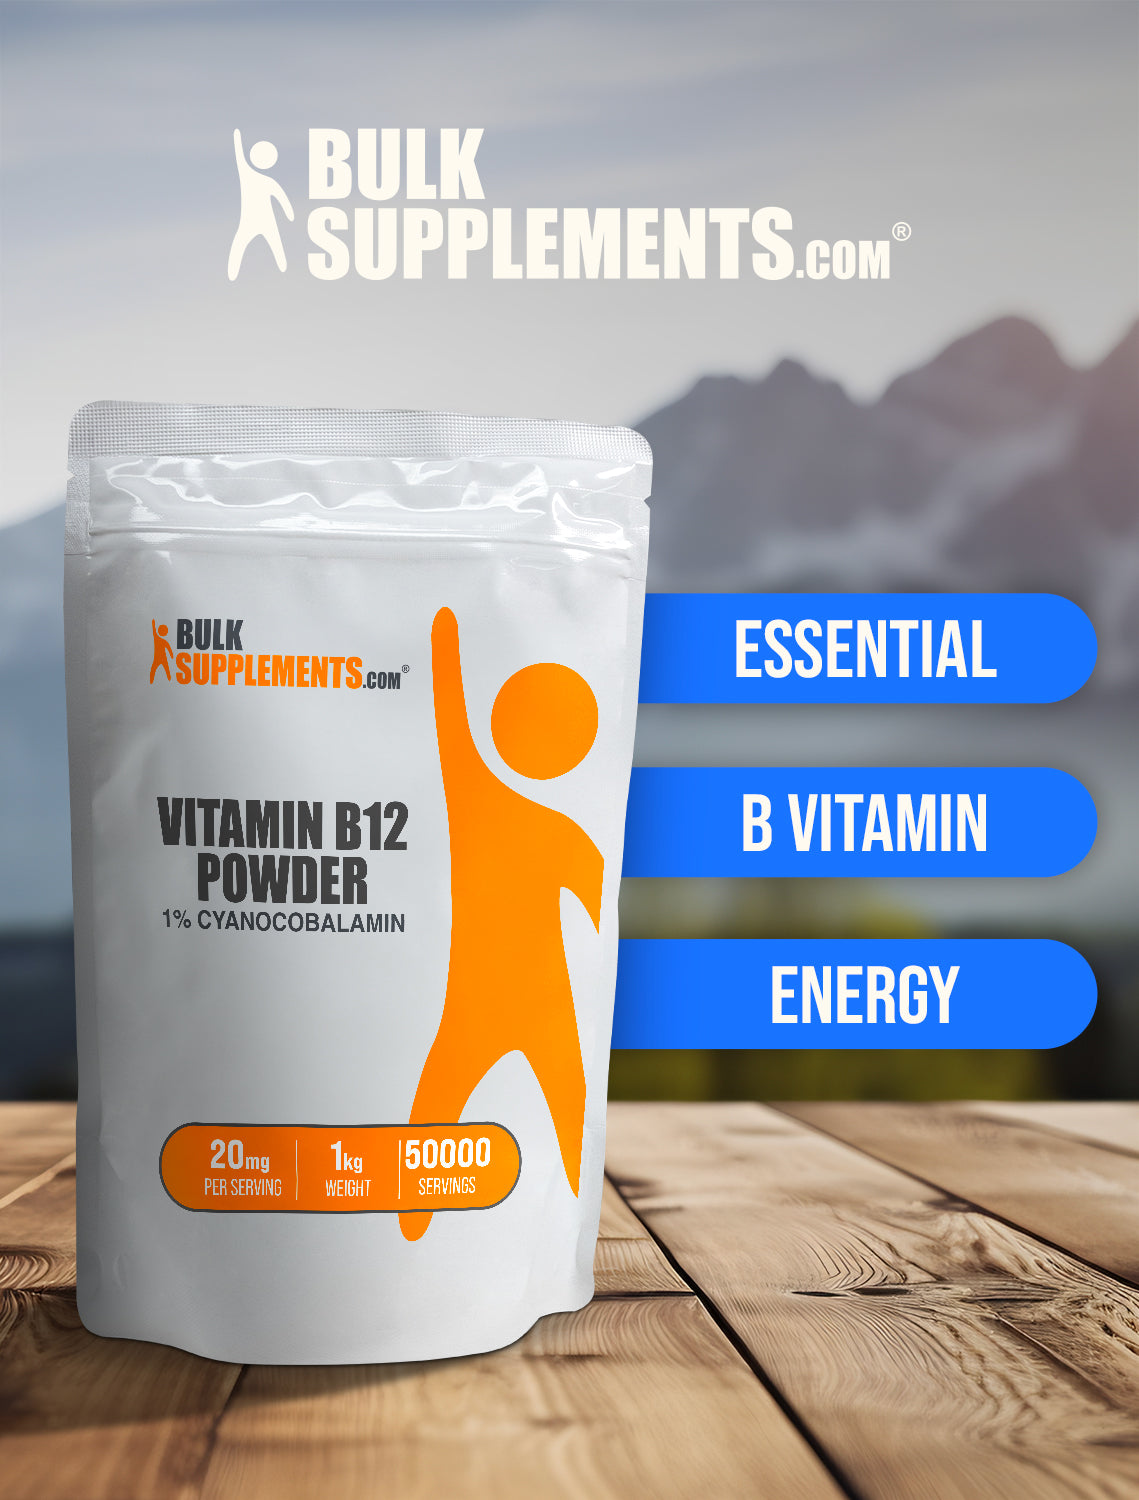 Vitamin B12 1% Cyanocobalamin powder keyword image 1kg